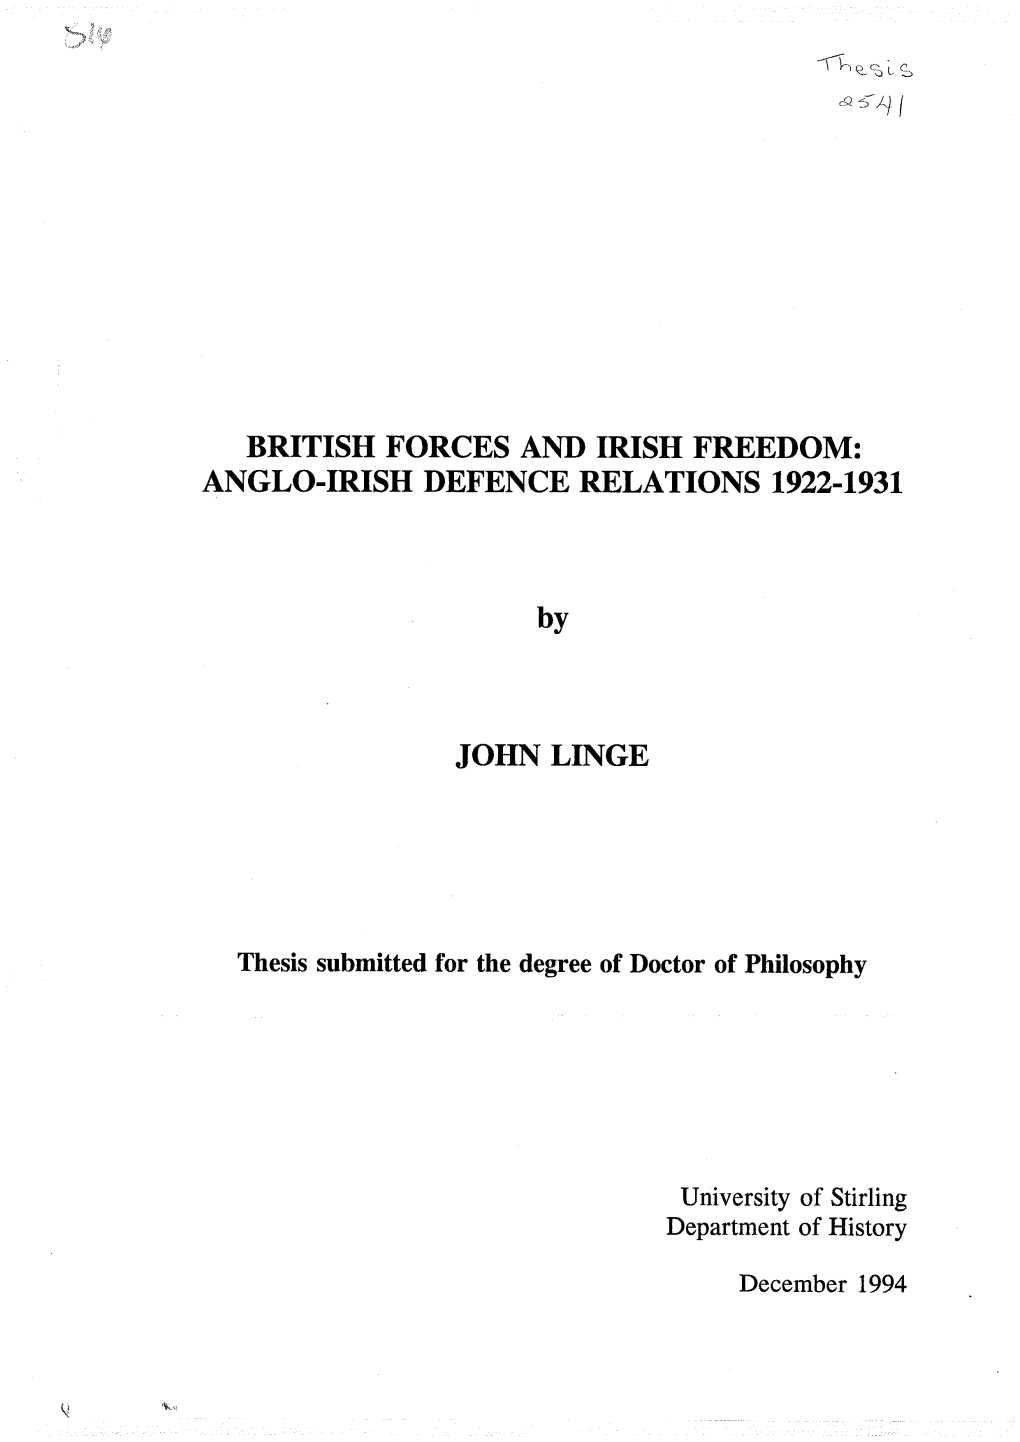 British Forces and Irish Freedom: Anglo-Irish Defence Relations 1922-1931